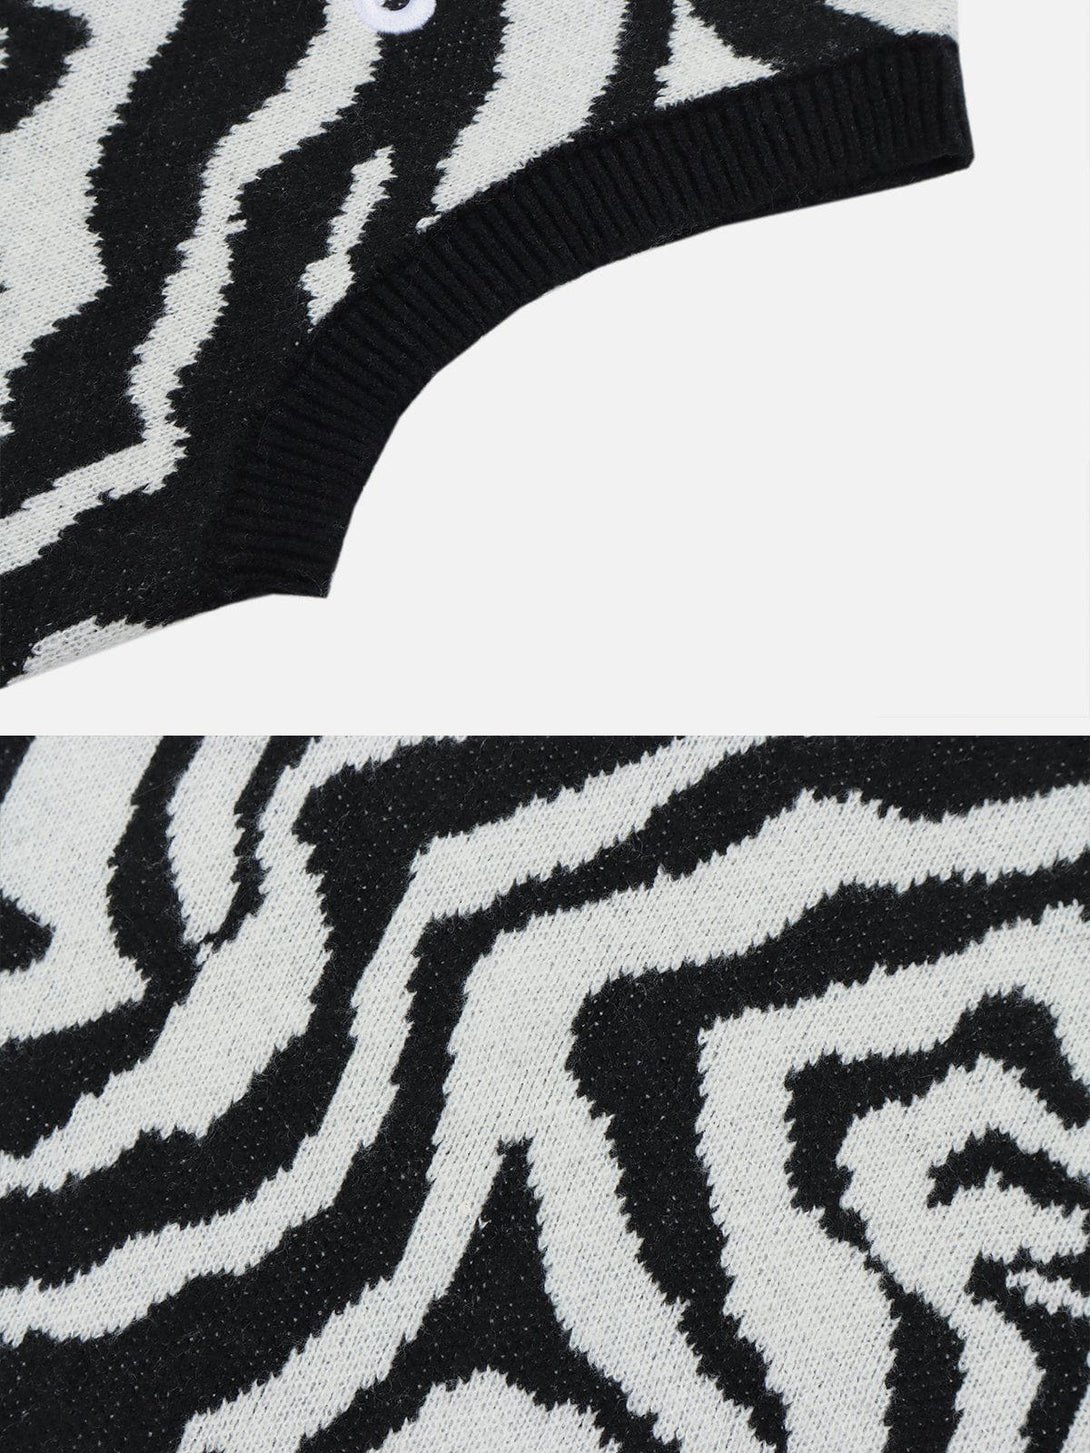 AlanBalen® - Zebra Pattern Embroidery Sweater Vest AlanBalen